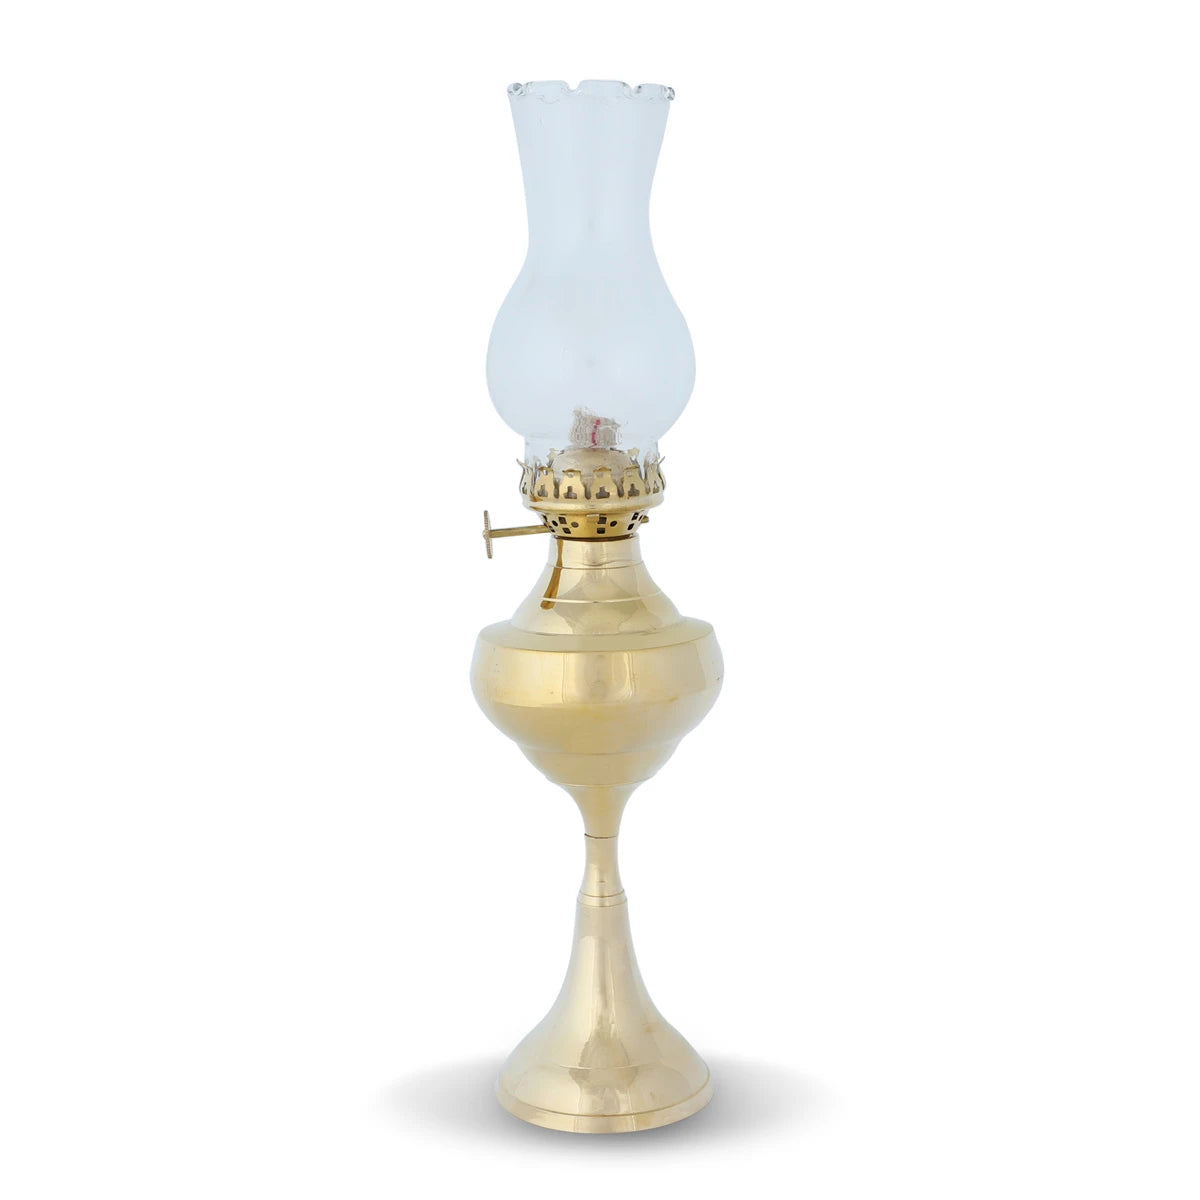 Vintage Glass Chimney Oil Lamp - Brass/ Gold